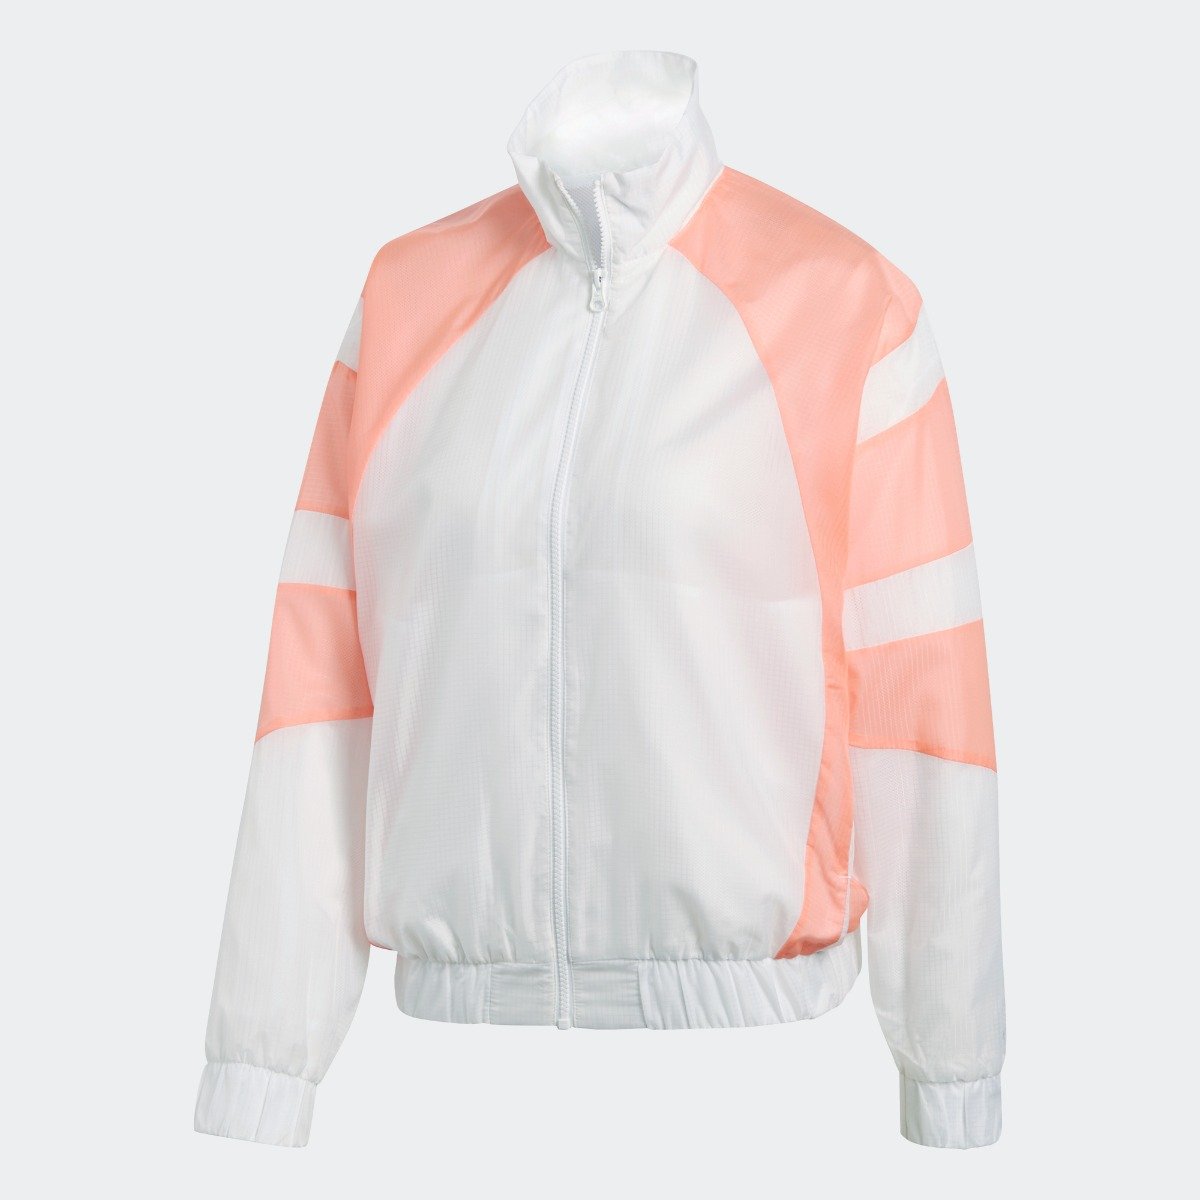 adidas peach track jacket